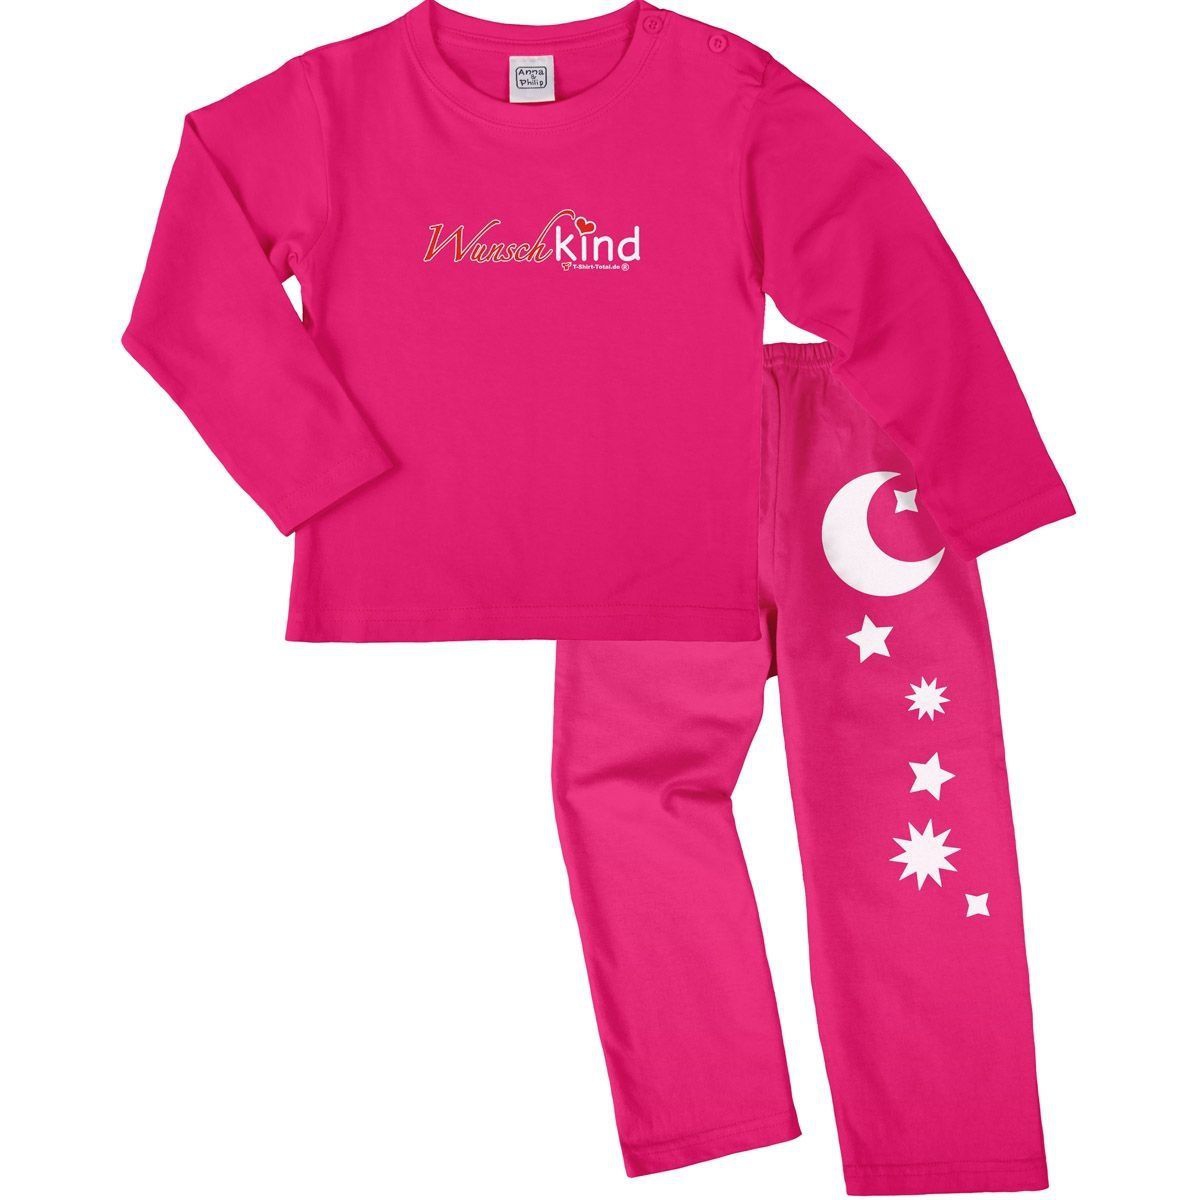 Wunschkind Pyjama Set pink / pink 80 / 86